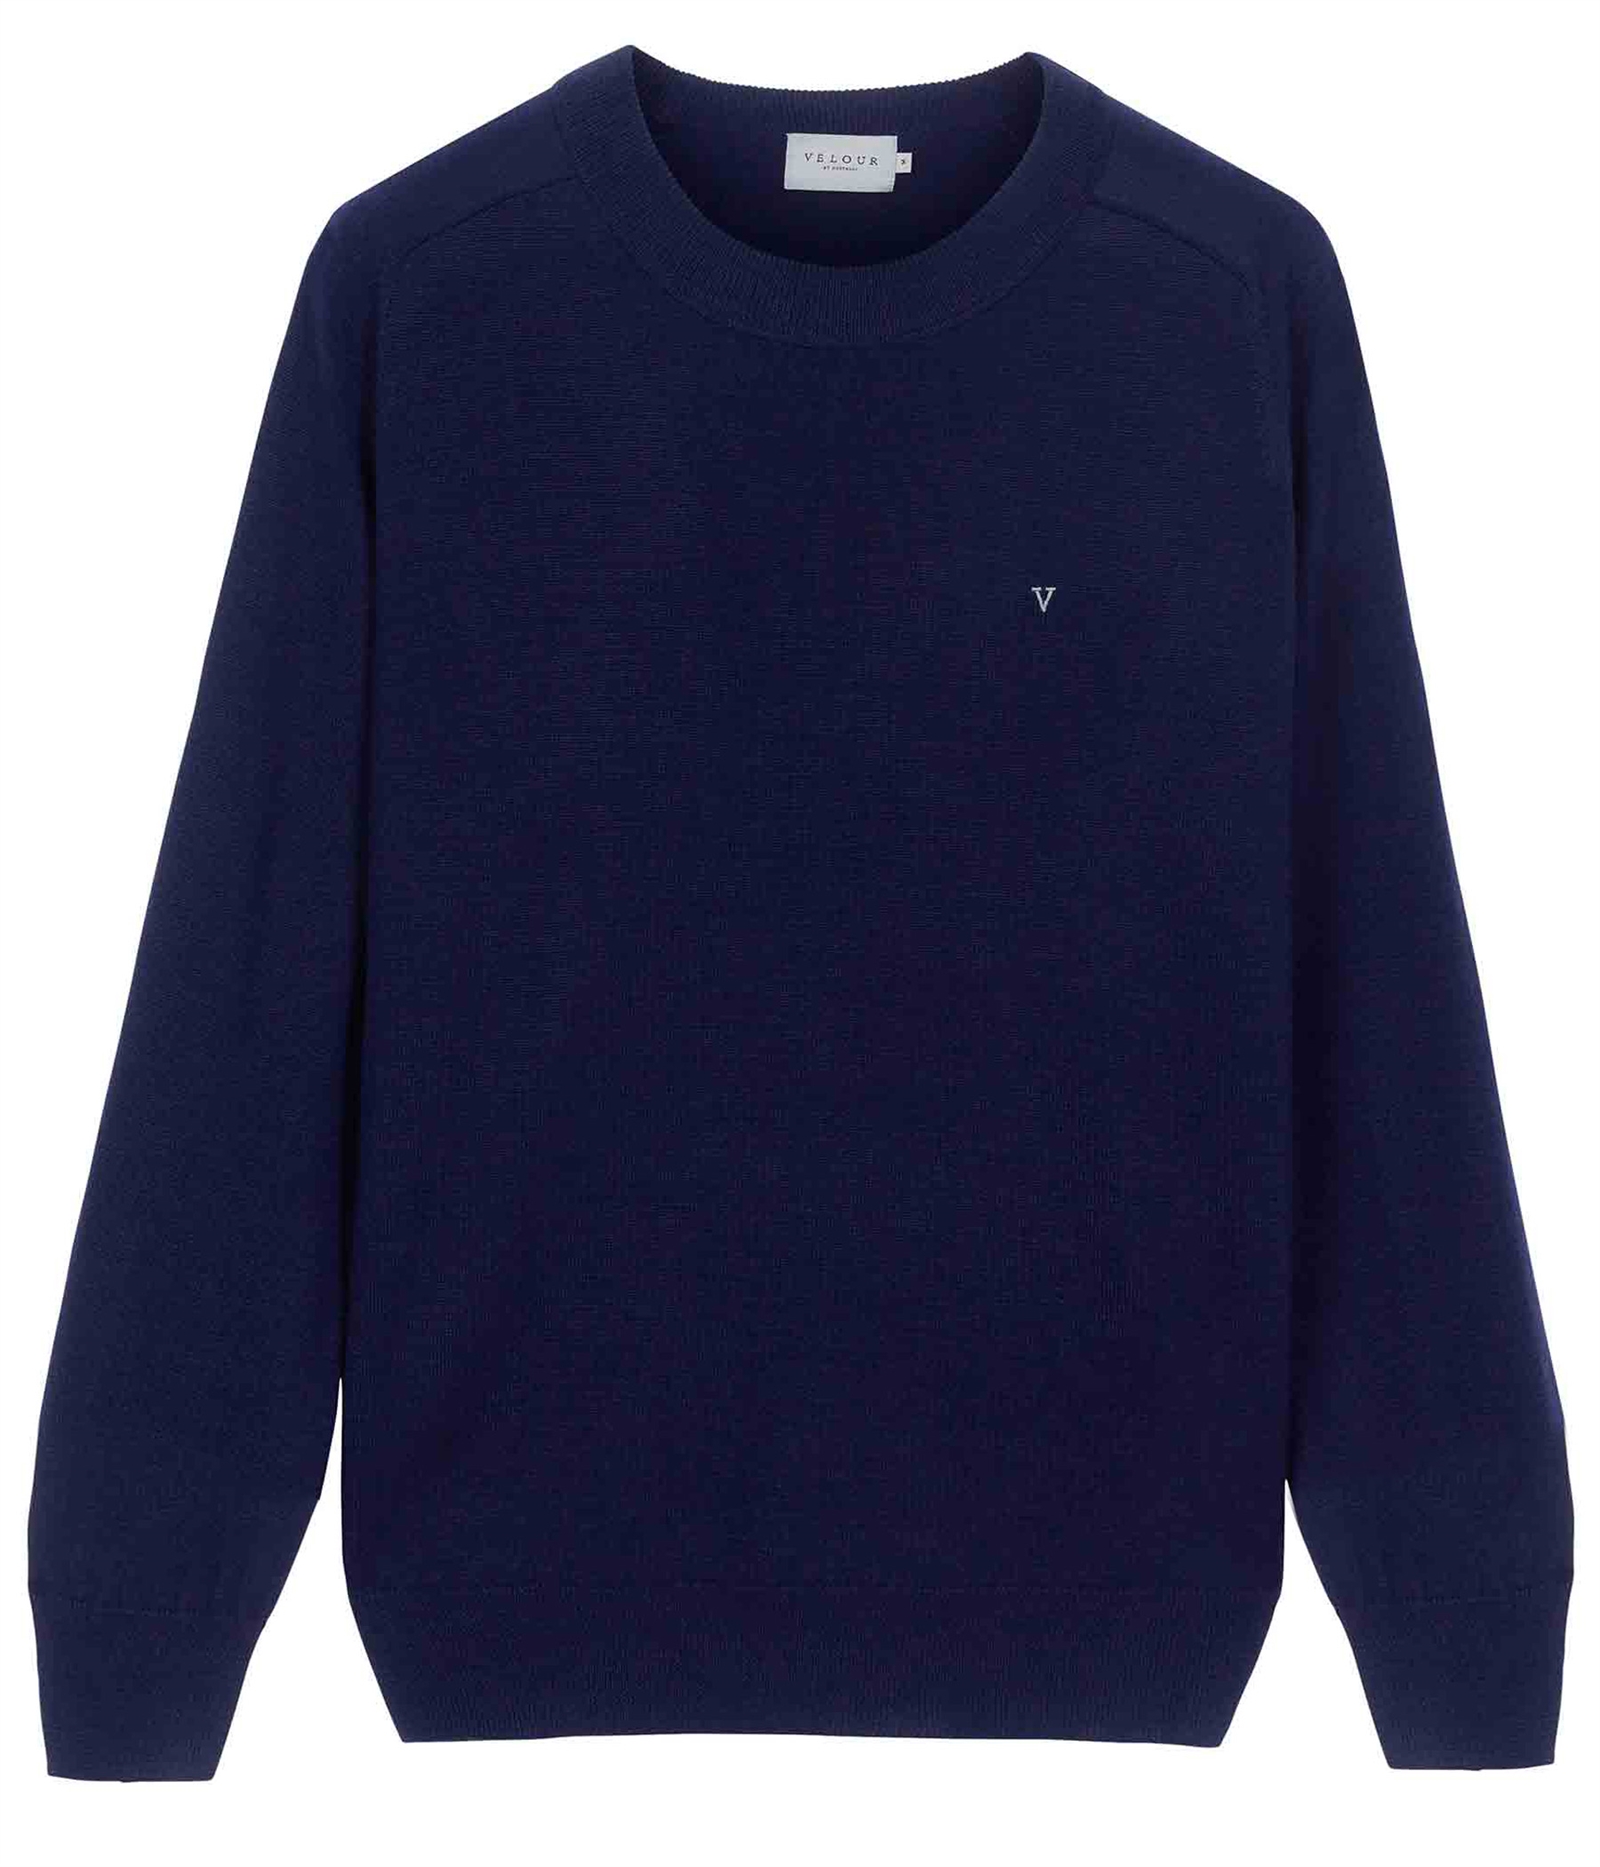 Brian Navy Sweater - - Velour By Nostalgi